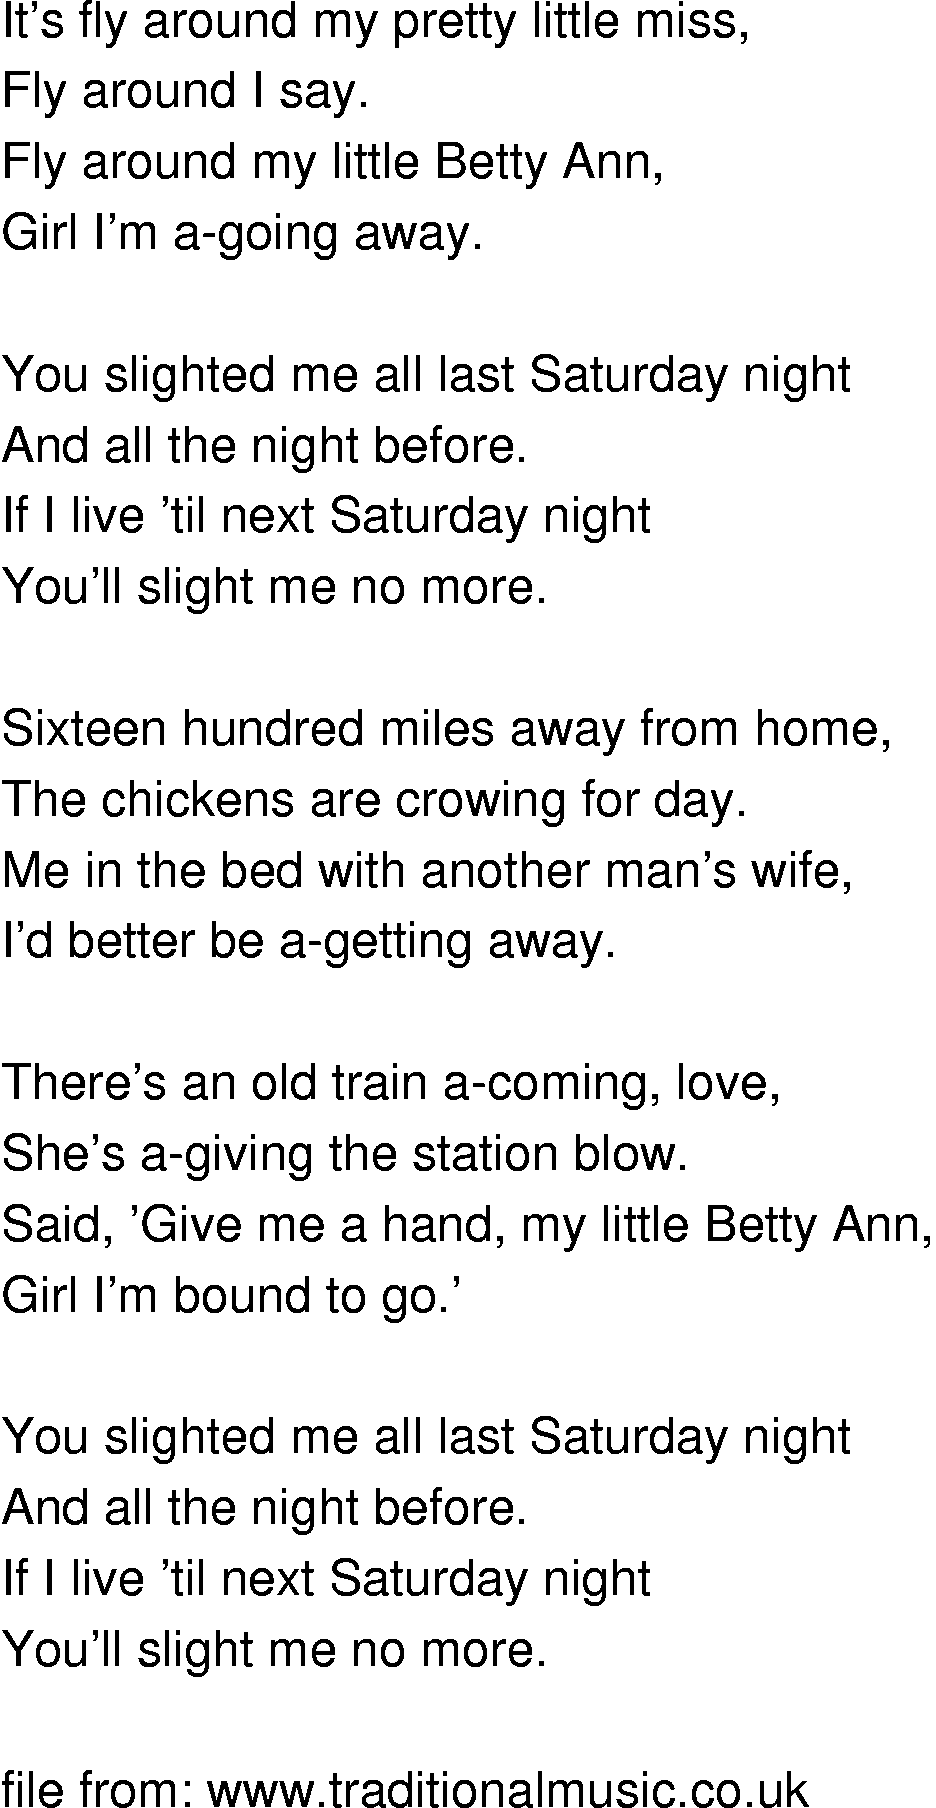 Old-Time (oldtimey) Song Lyrics - little betty ann